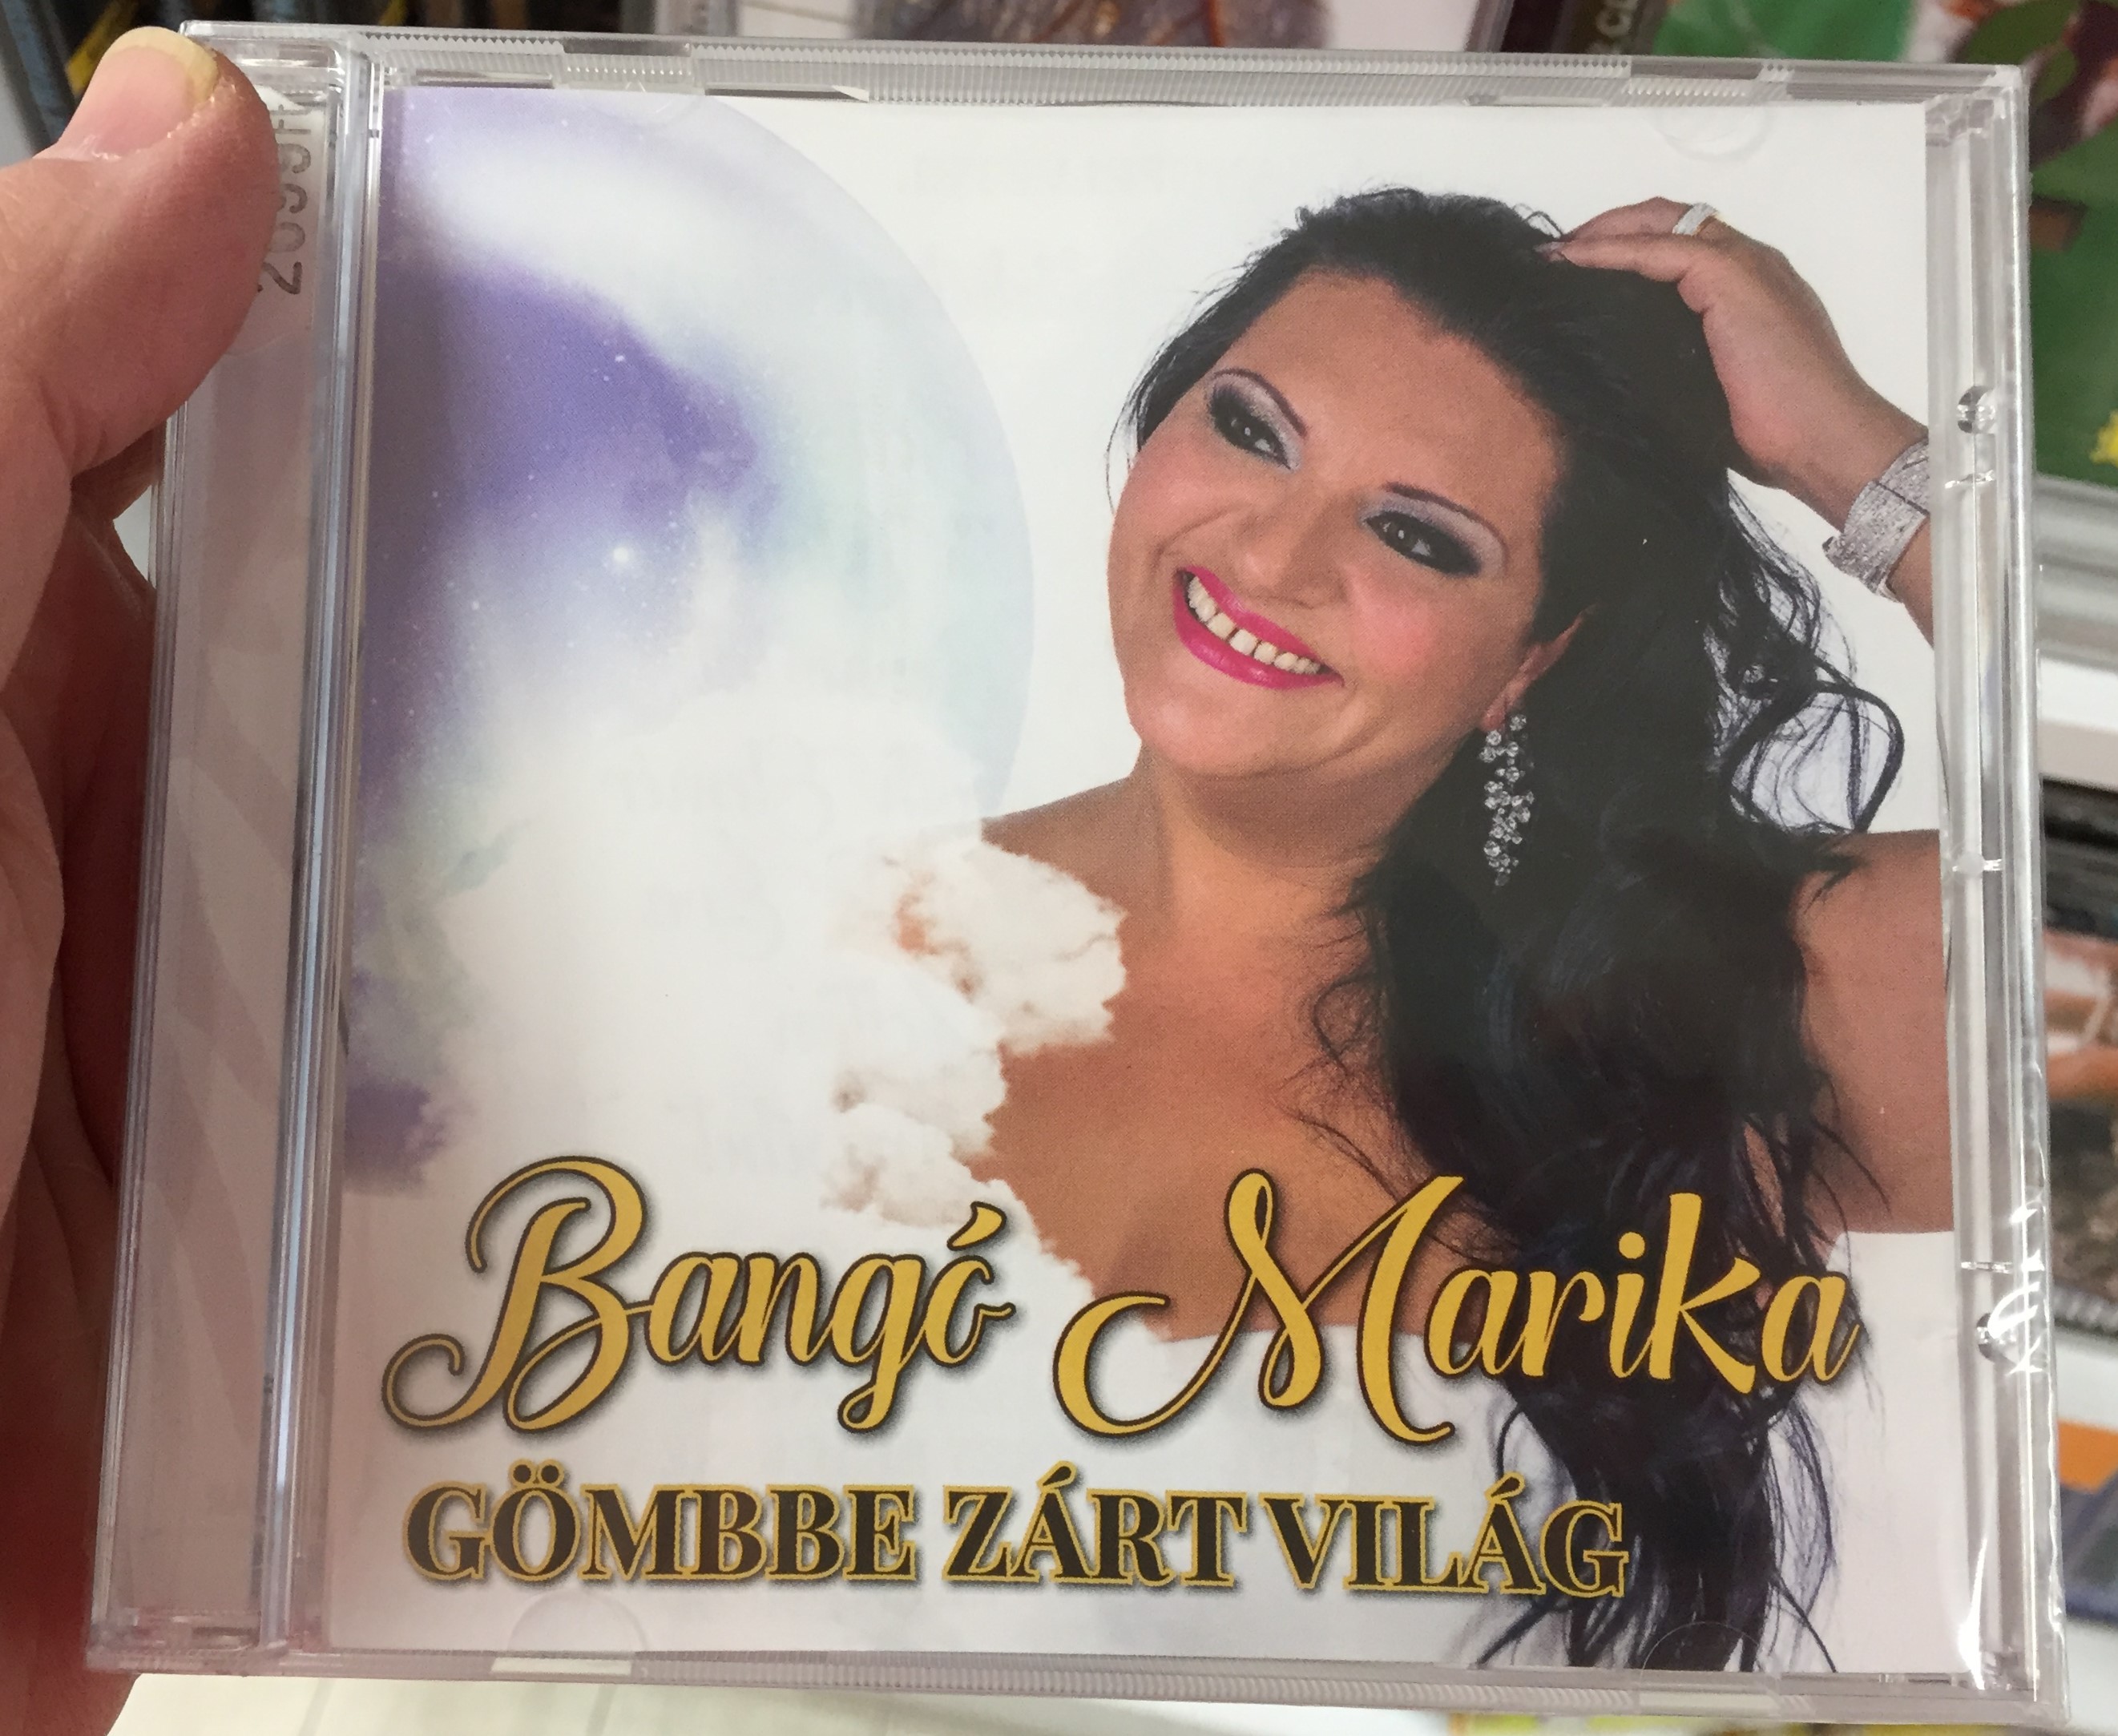 bango-marika-gombbe-zart-vilag-trimedio-music-kft.-2016-9702291127466-1-.jpg